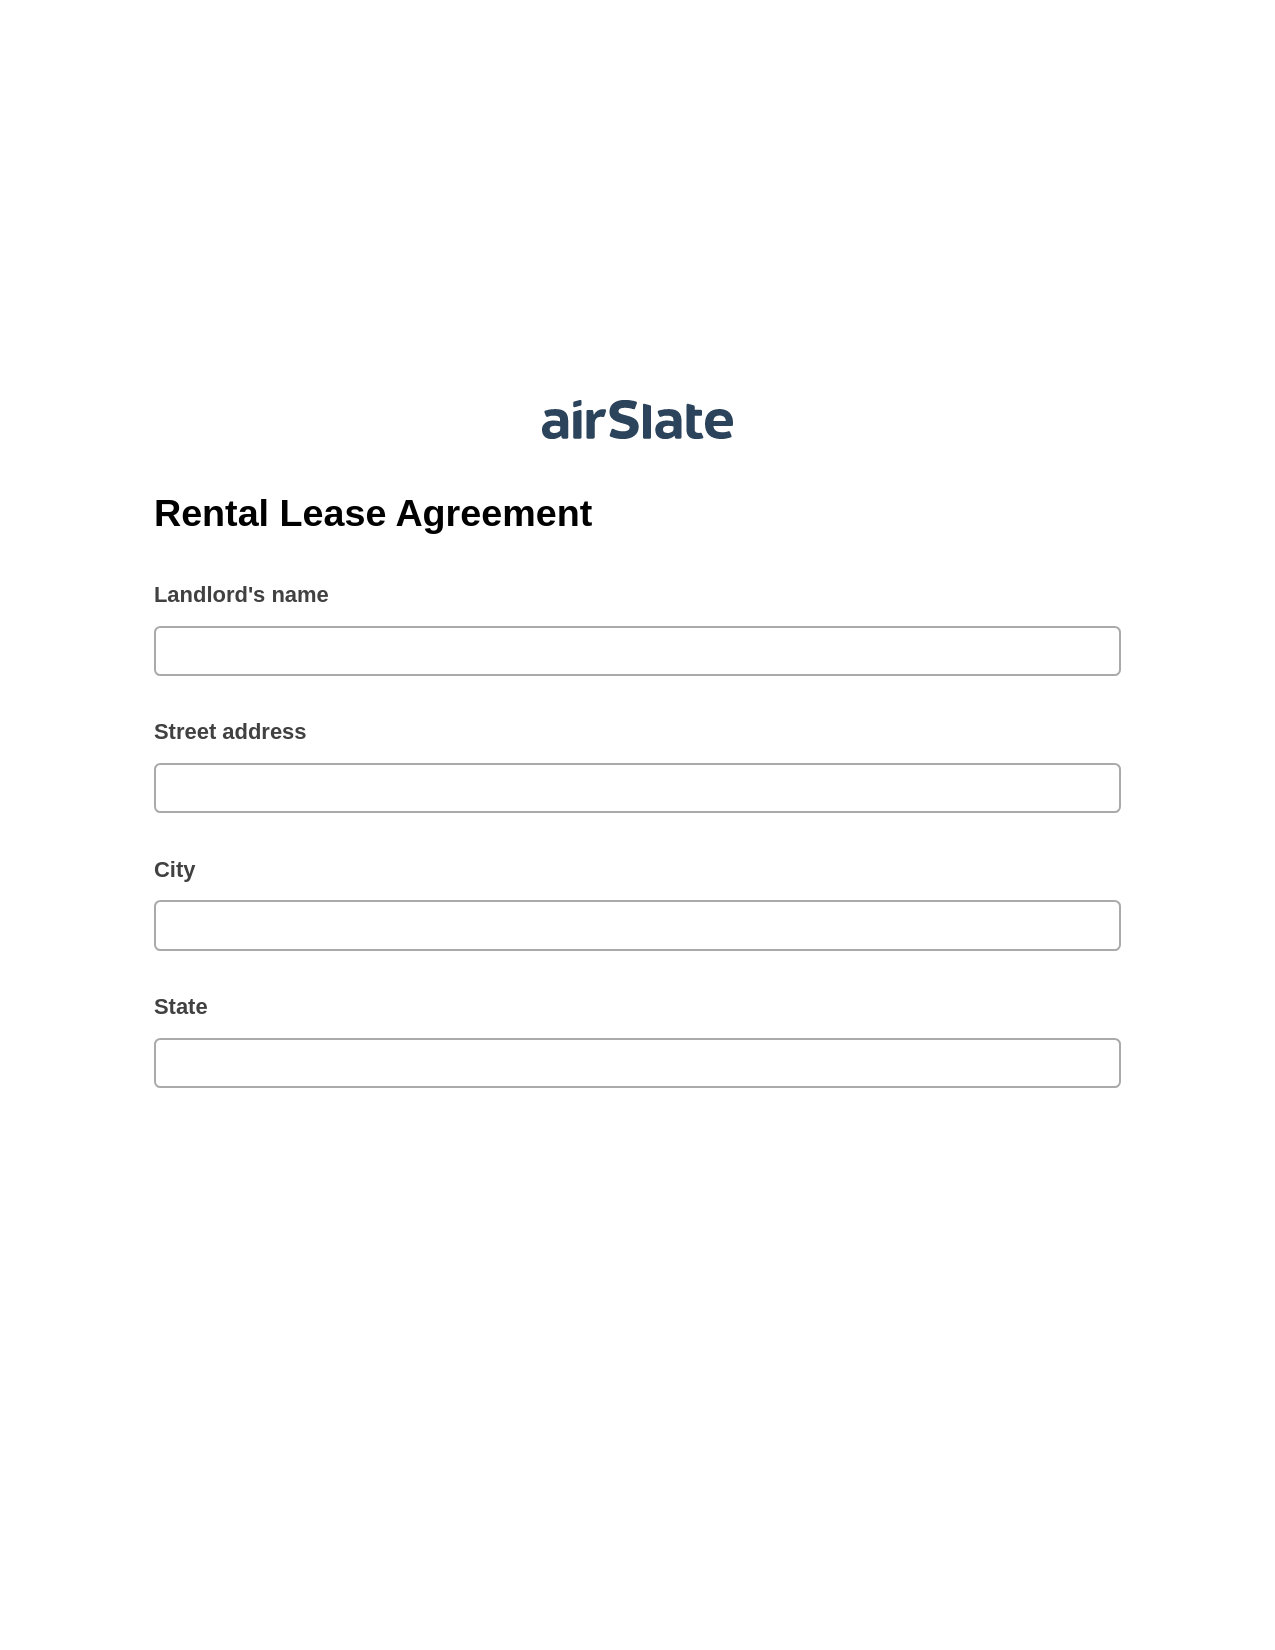 Rental Lease Agreement Pre-fill from MySQL Bot, Invoke Salesforce Process Bot, Export to Smartsheet